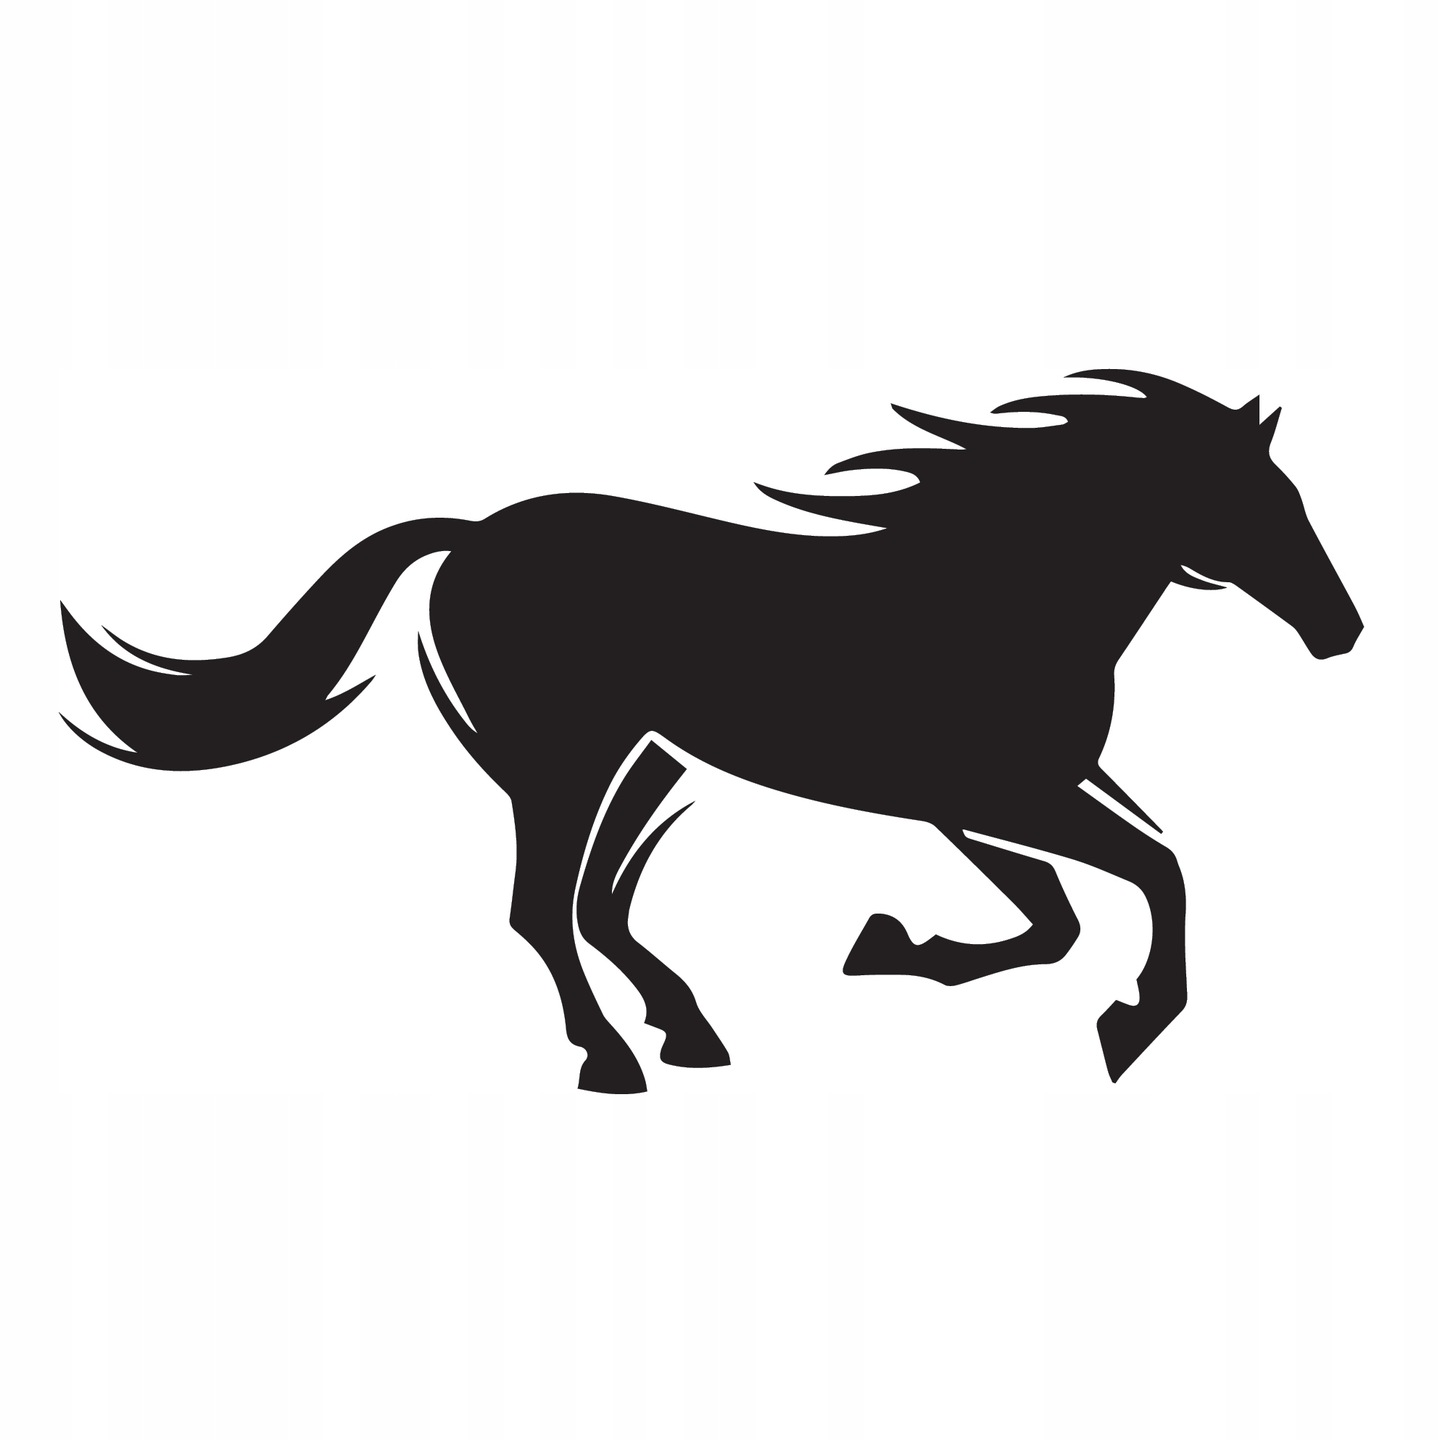 Naklejka KOŃ NA SAMOCHÓD konie HOBBY jeździectwo